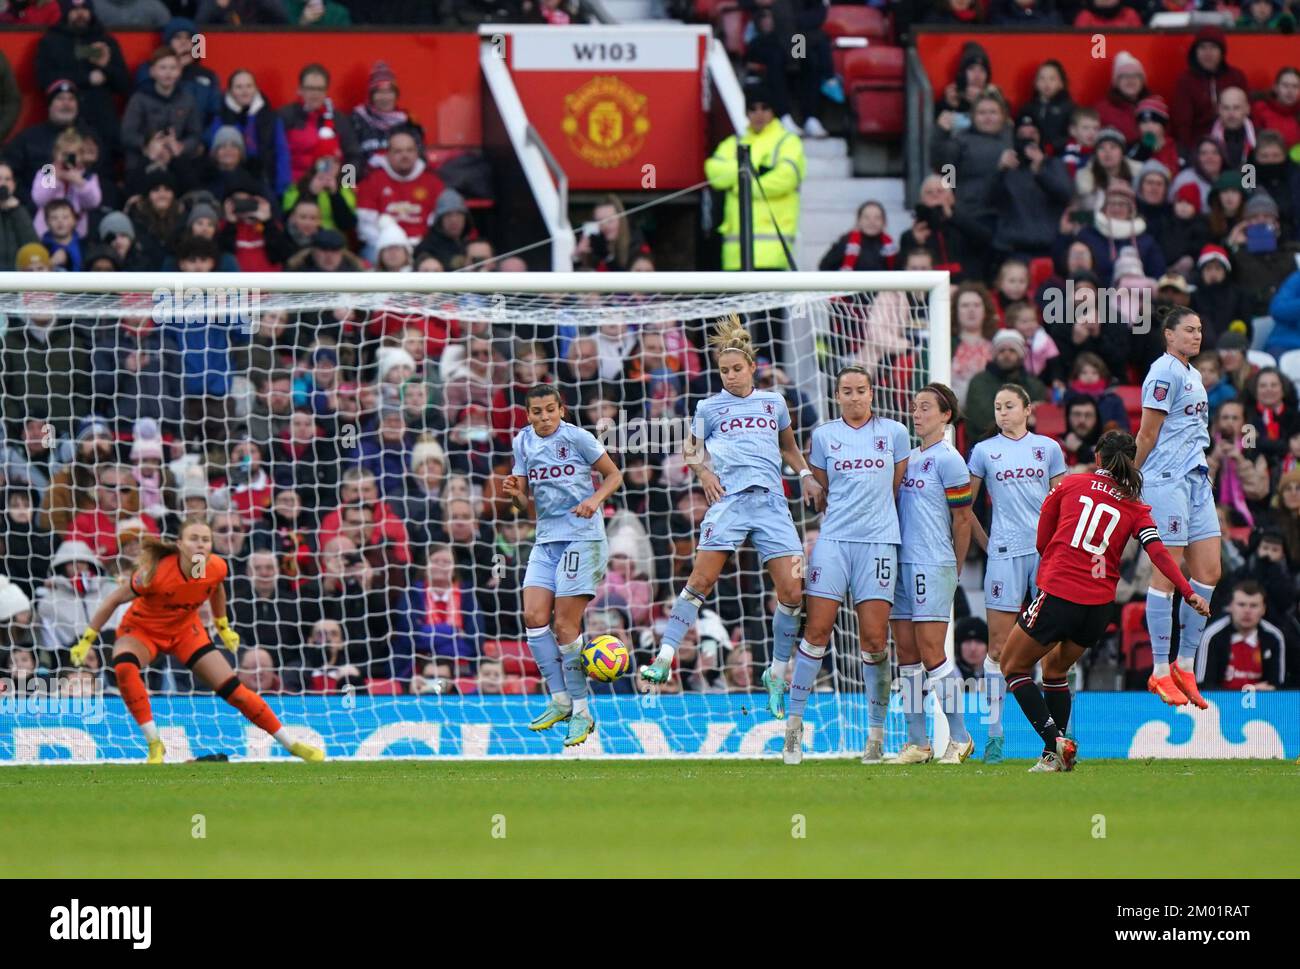 Katie Zelem, del Manchester United, toma un tiro libre durante el partido de la Superliga Femenina Barclays en Old Trafford, Manchester. Fecha de la foto: Sábado 3 de diciembre de 2022. Foto de stock